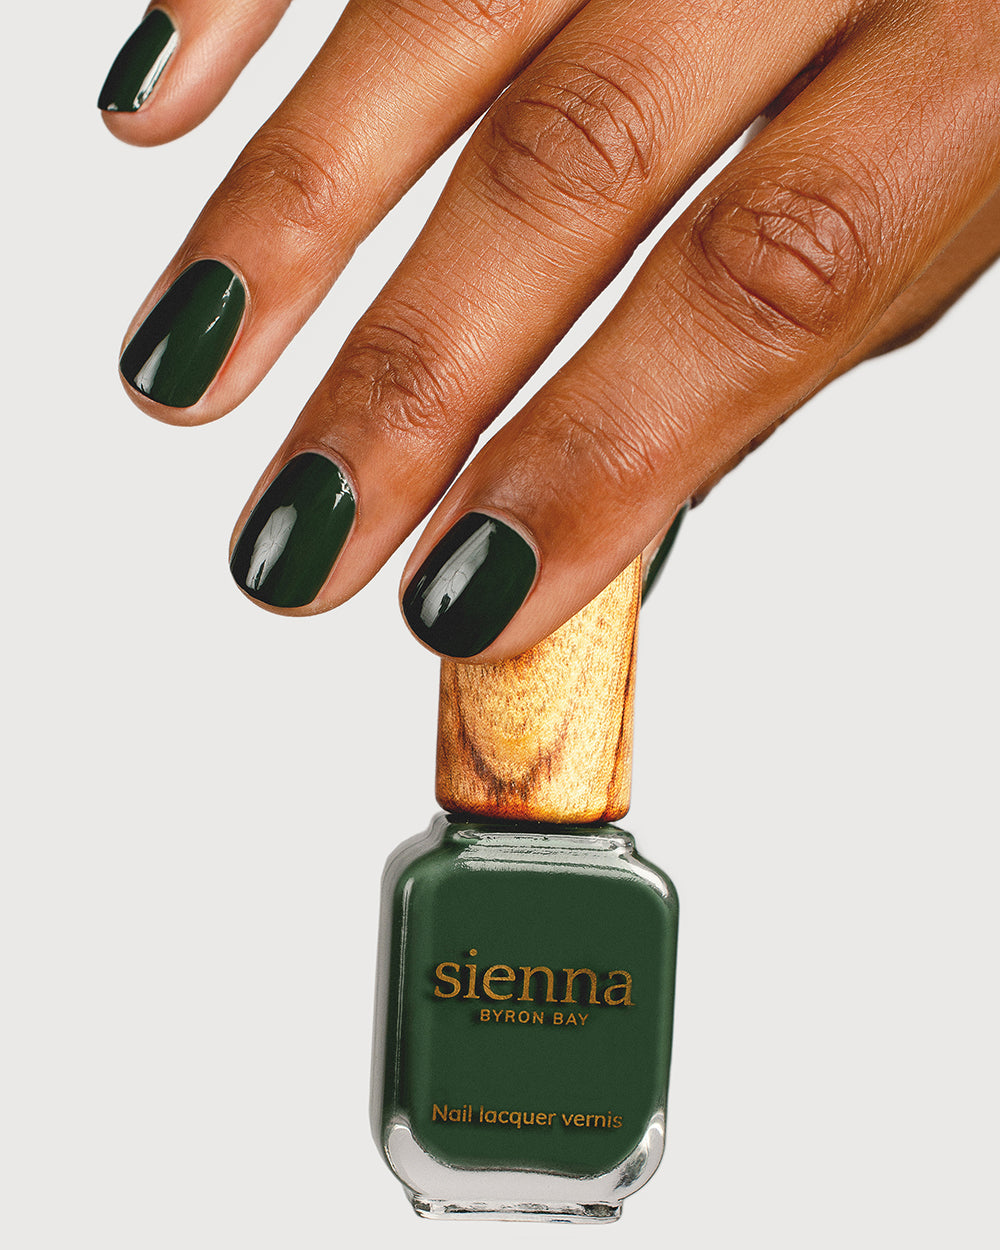 deep olive green nail polish hand swatch on medium skin tone holding sienna bottle